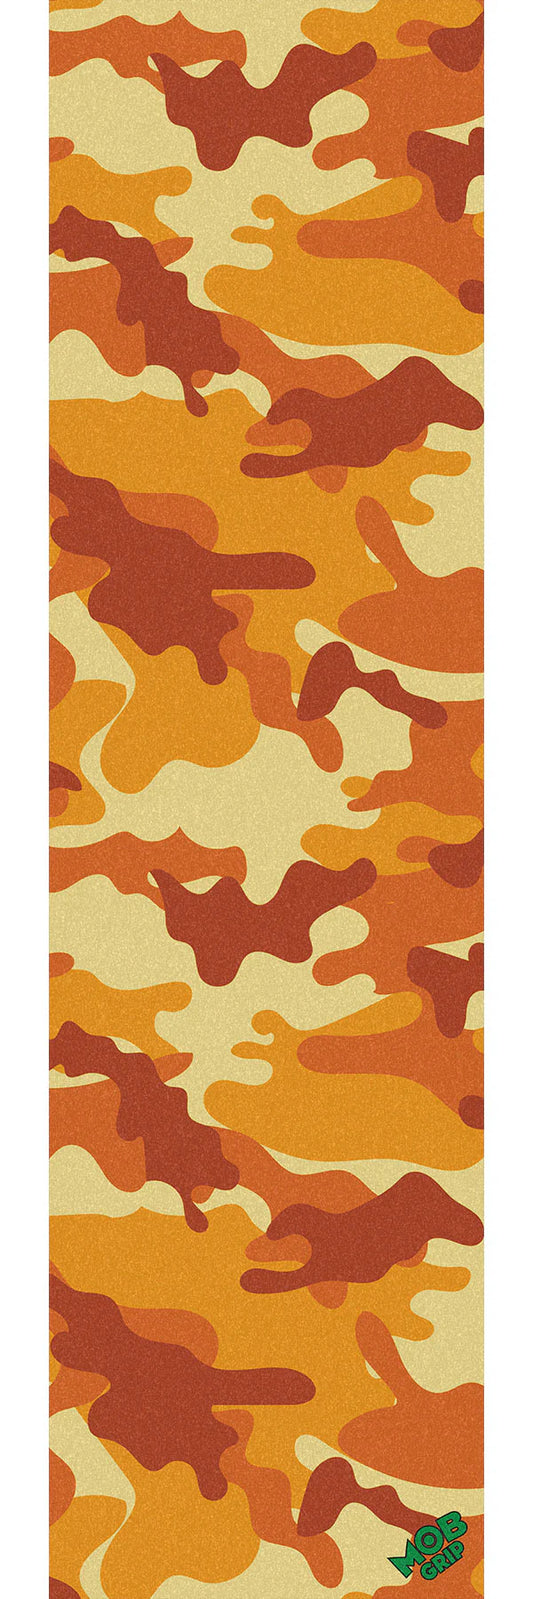 Mob grip tape orange camouflage 9”x33”